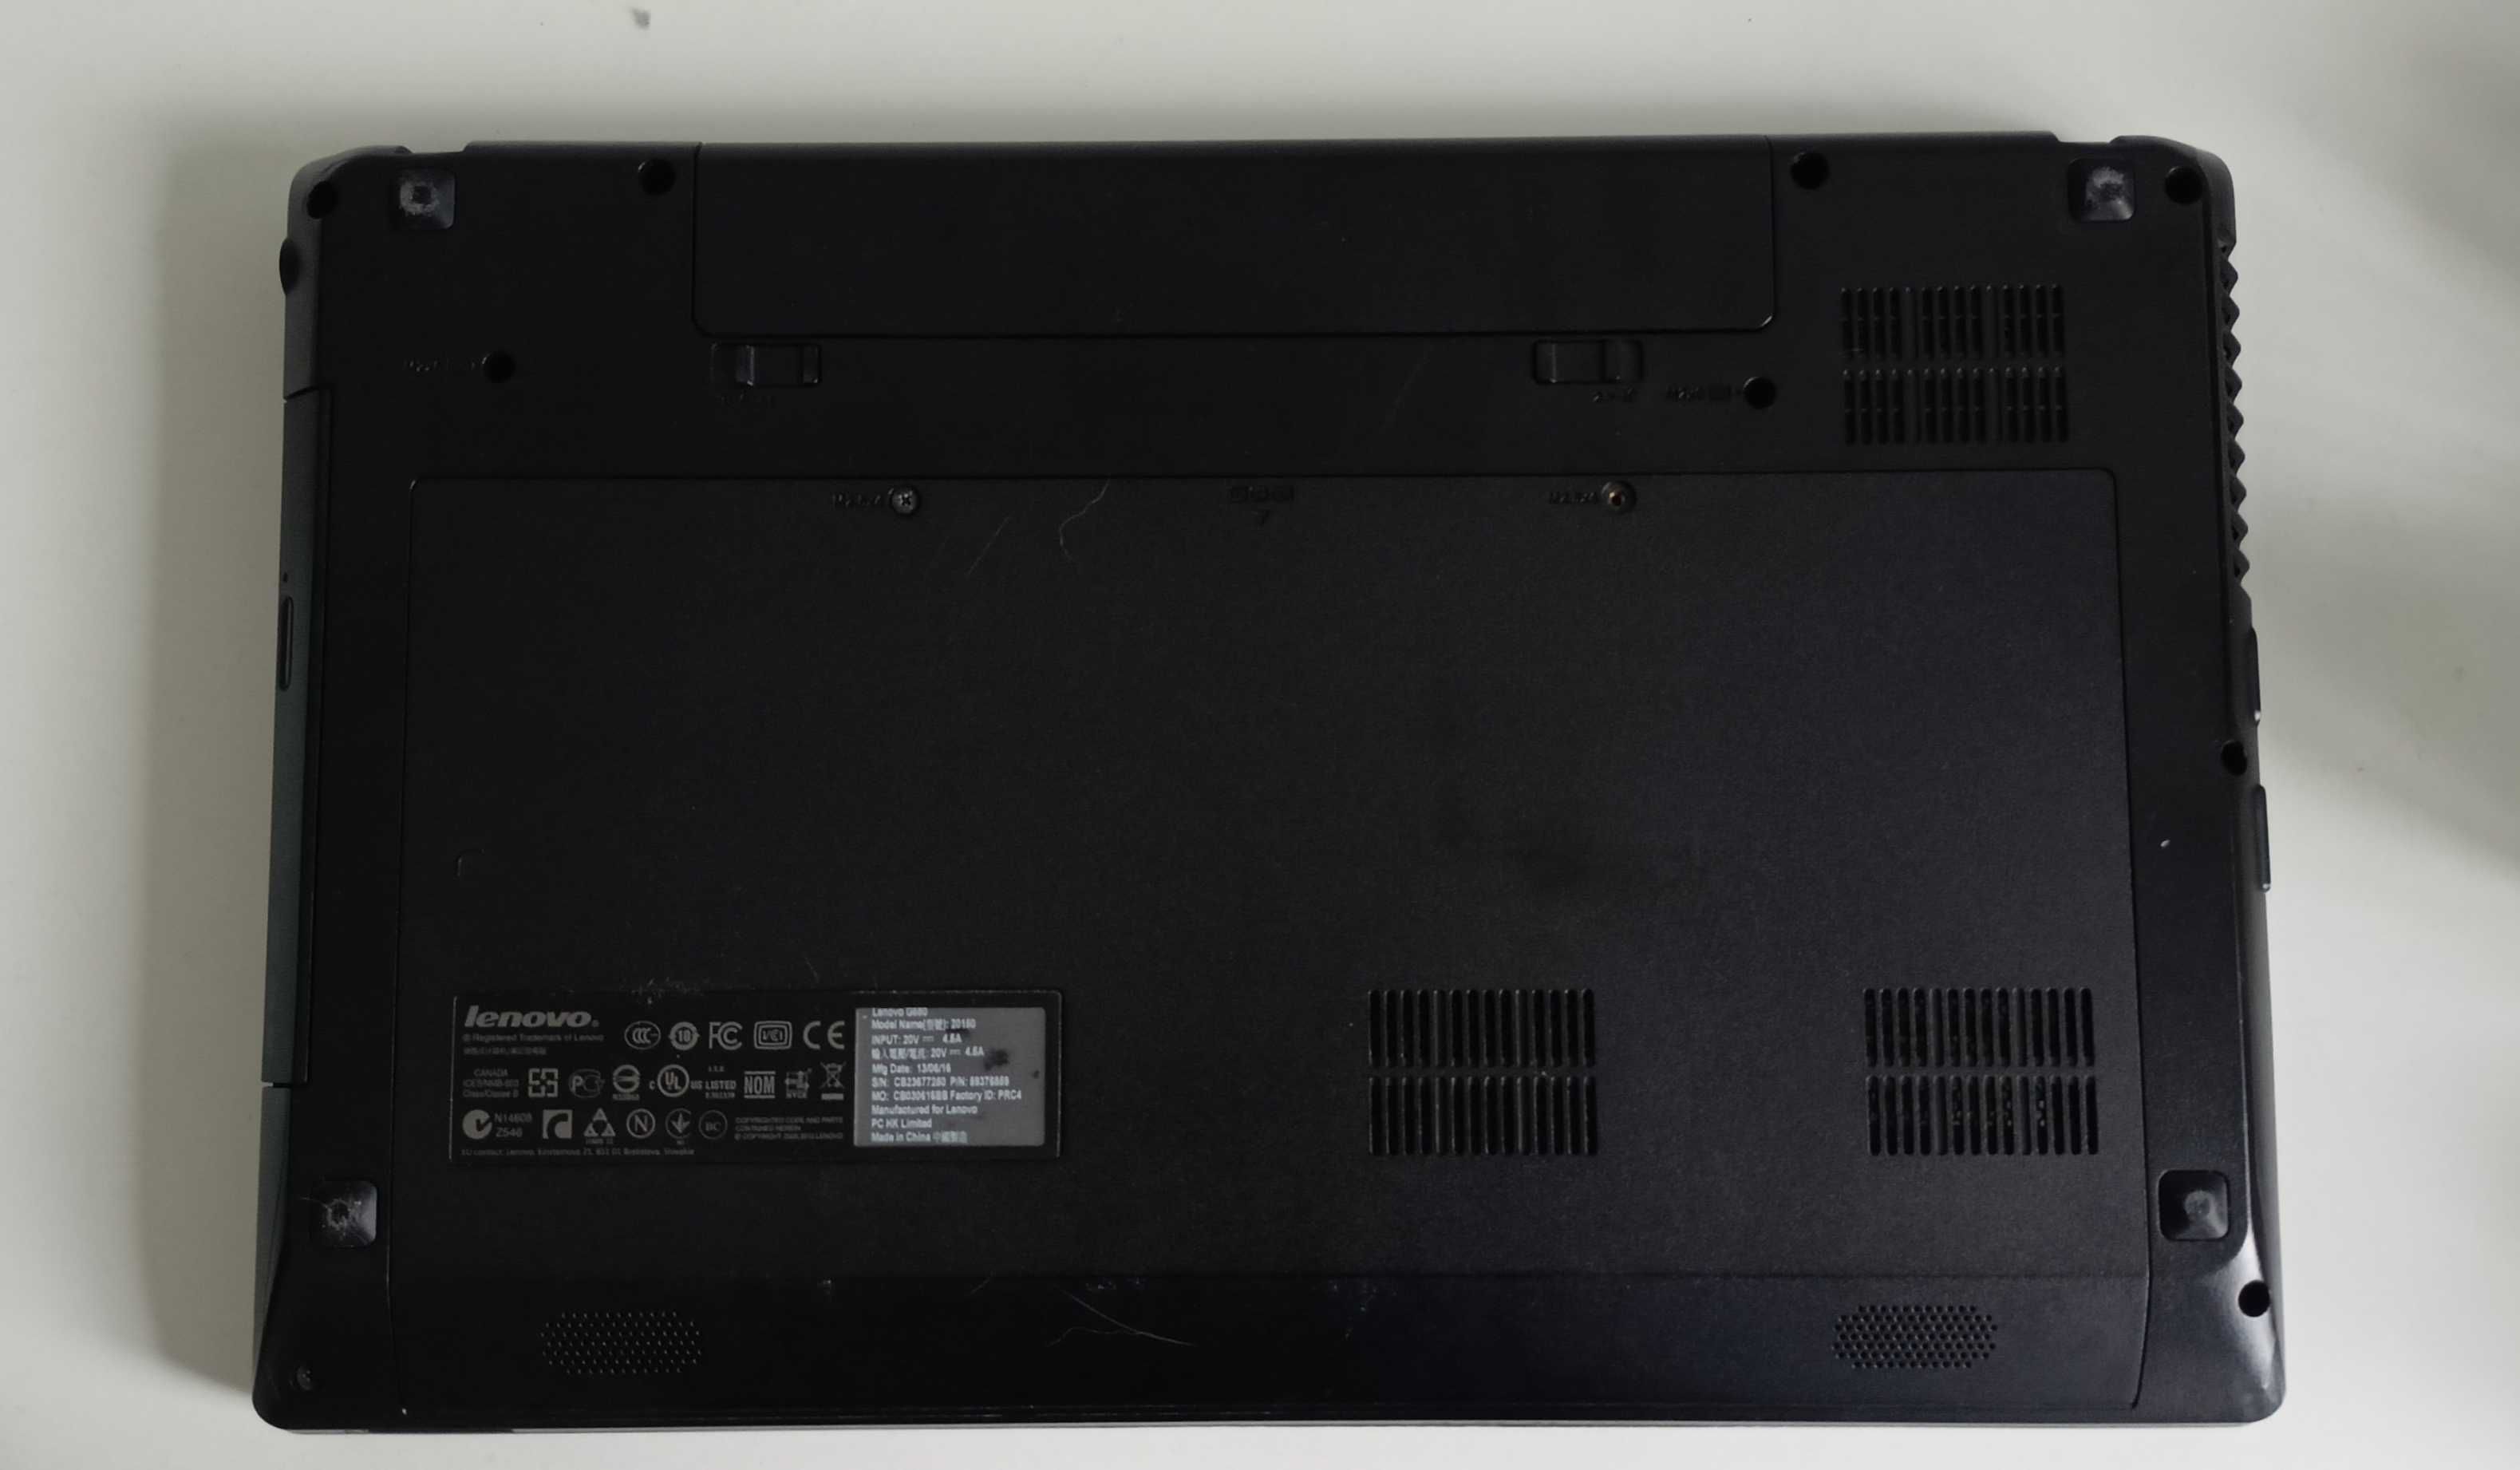 Laptop Lenovo G580 z modyfikacjami komputer 120GB SSD Linux